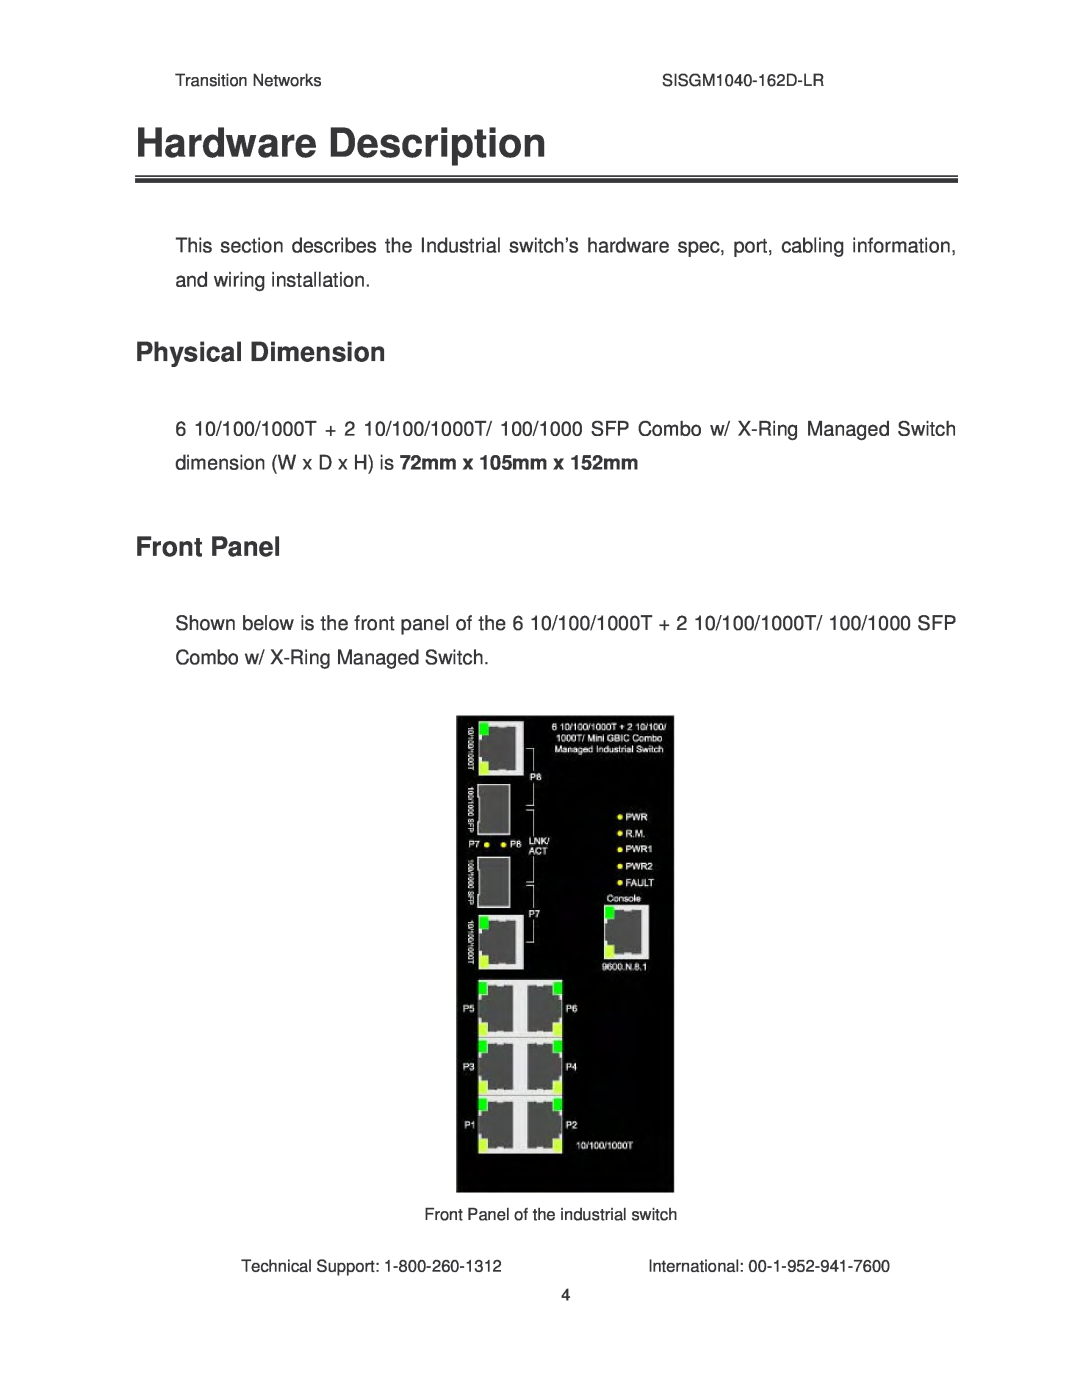 Transition Networks SISGM1040-162D manual Hardware Description, Physical Dimension, Front Panel 